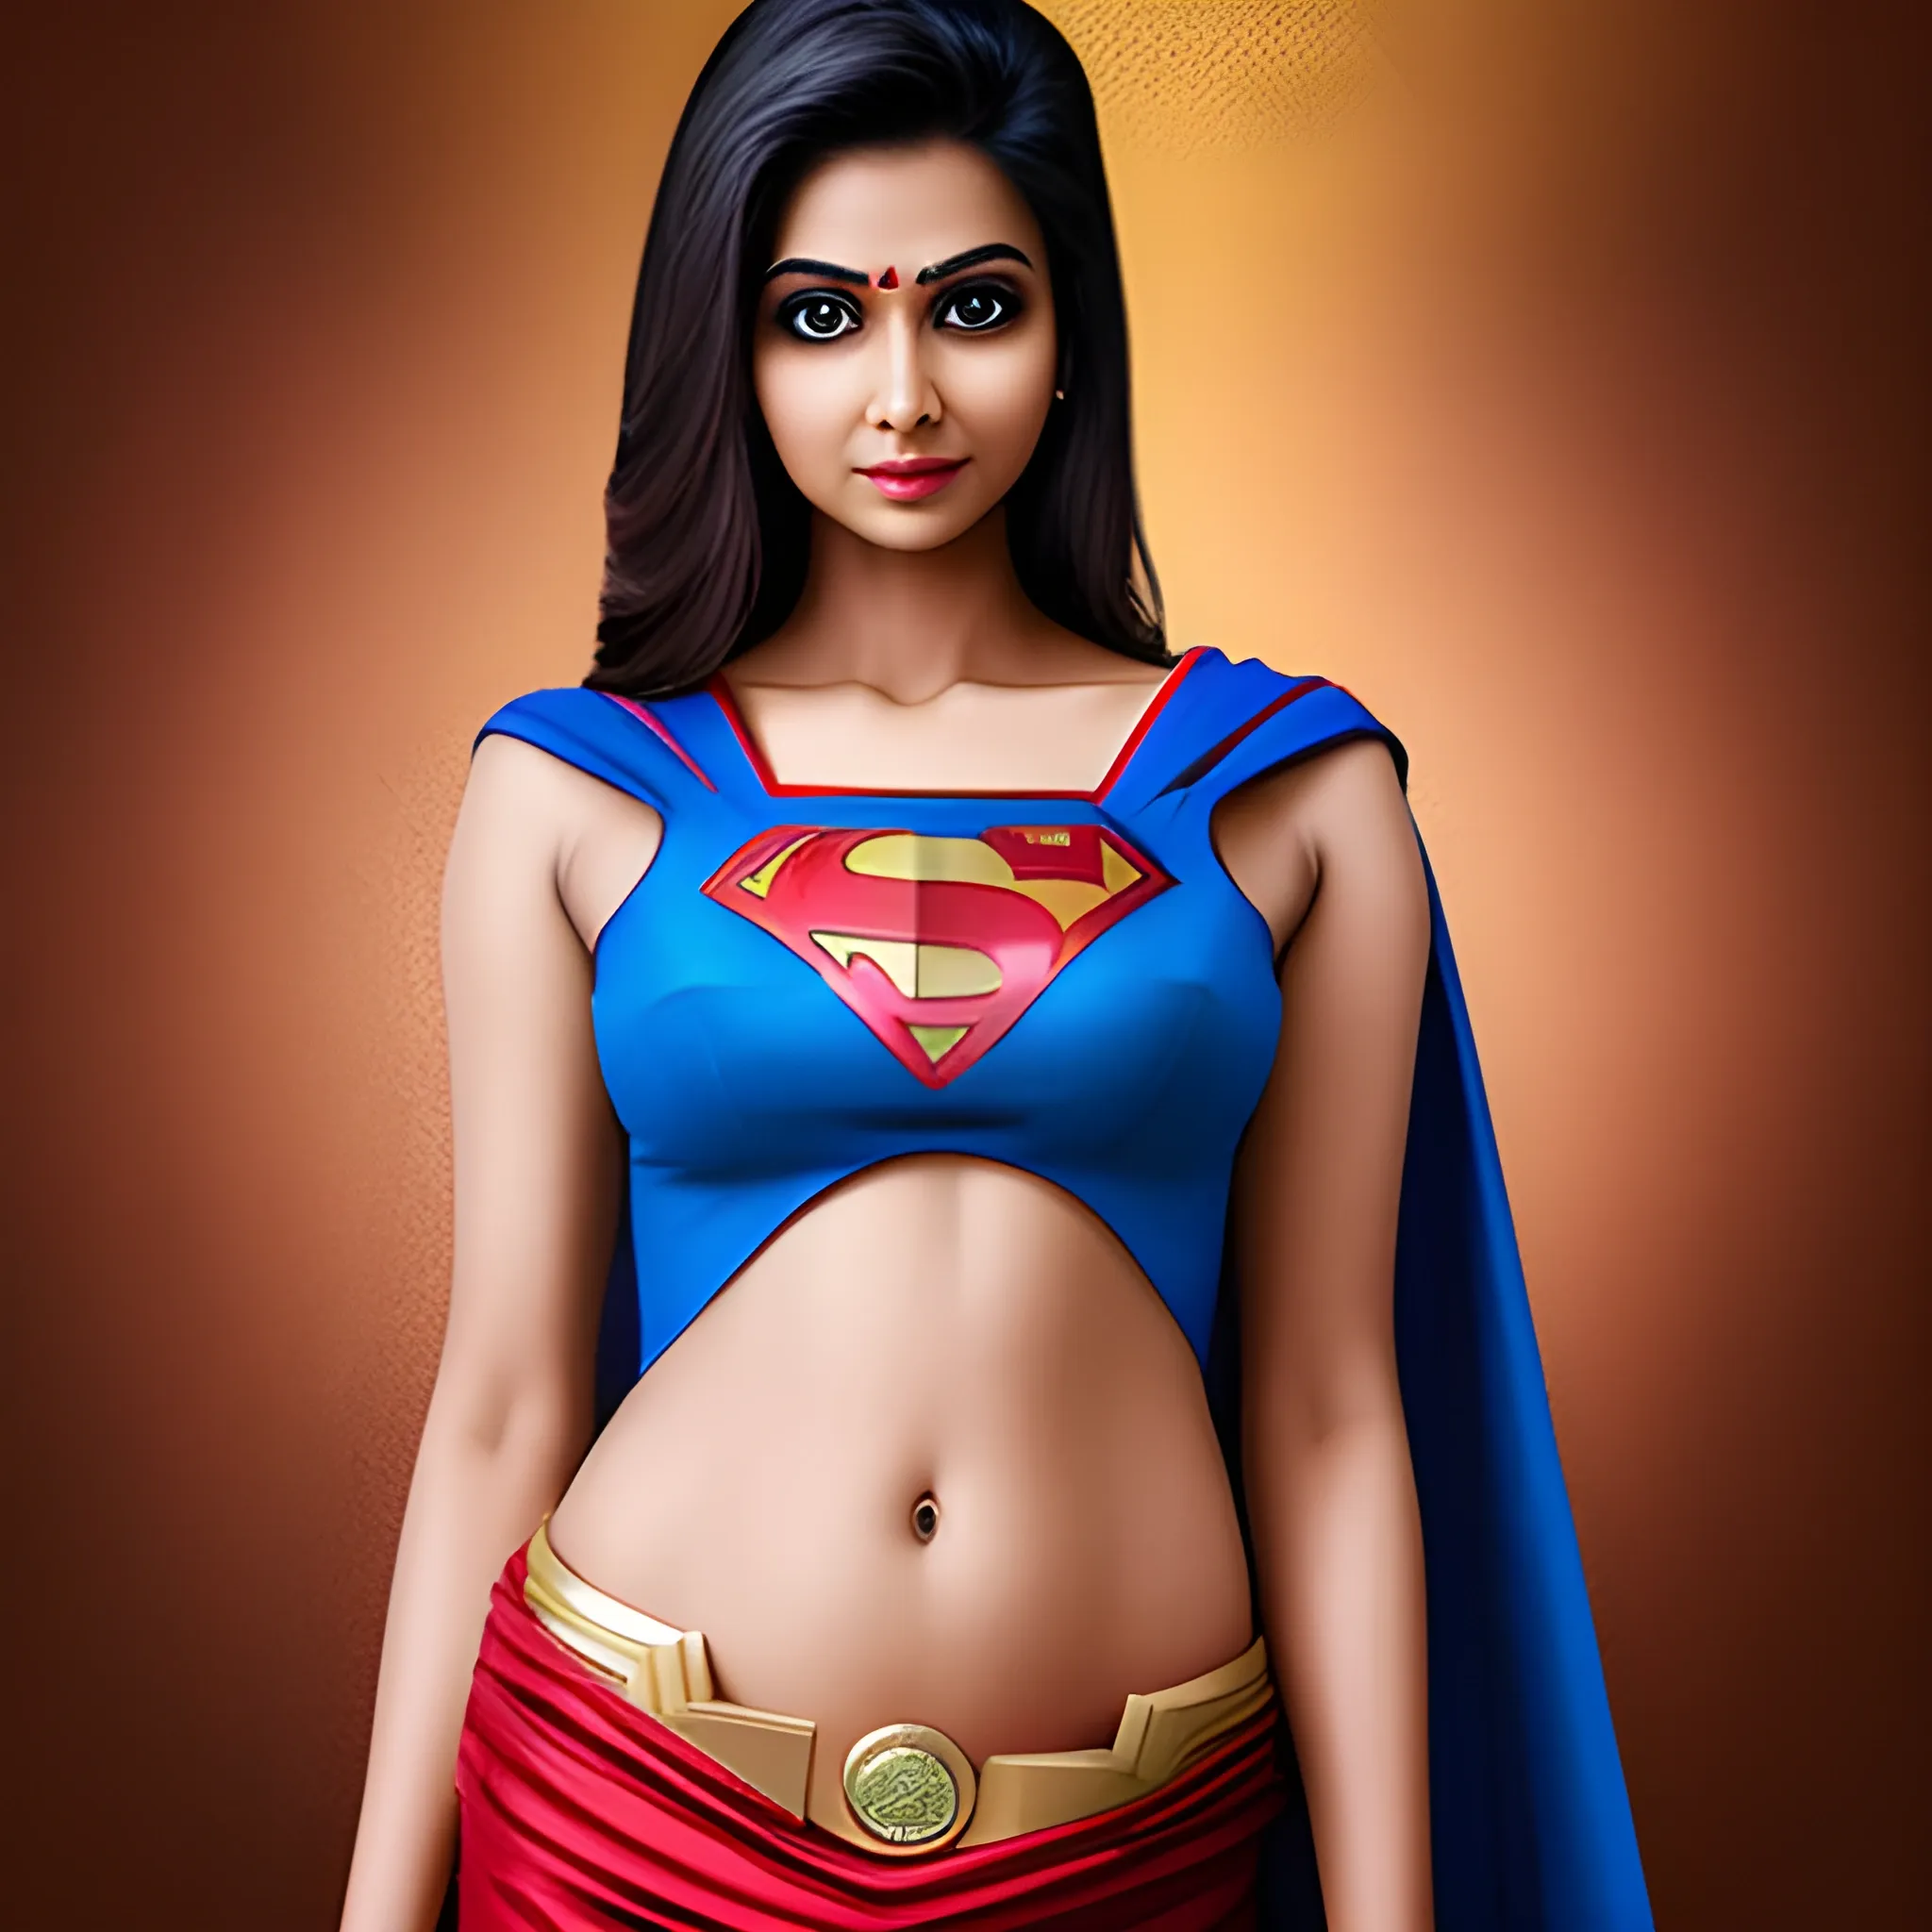 An elegant indian lady wearing a Superman costume, eye-catching detail, realistic ultra-detailed, eye catchy, stylish, beautiful navel